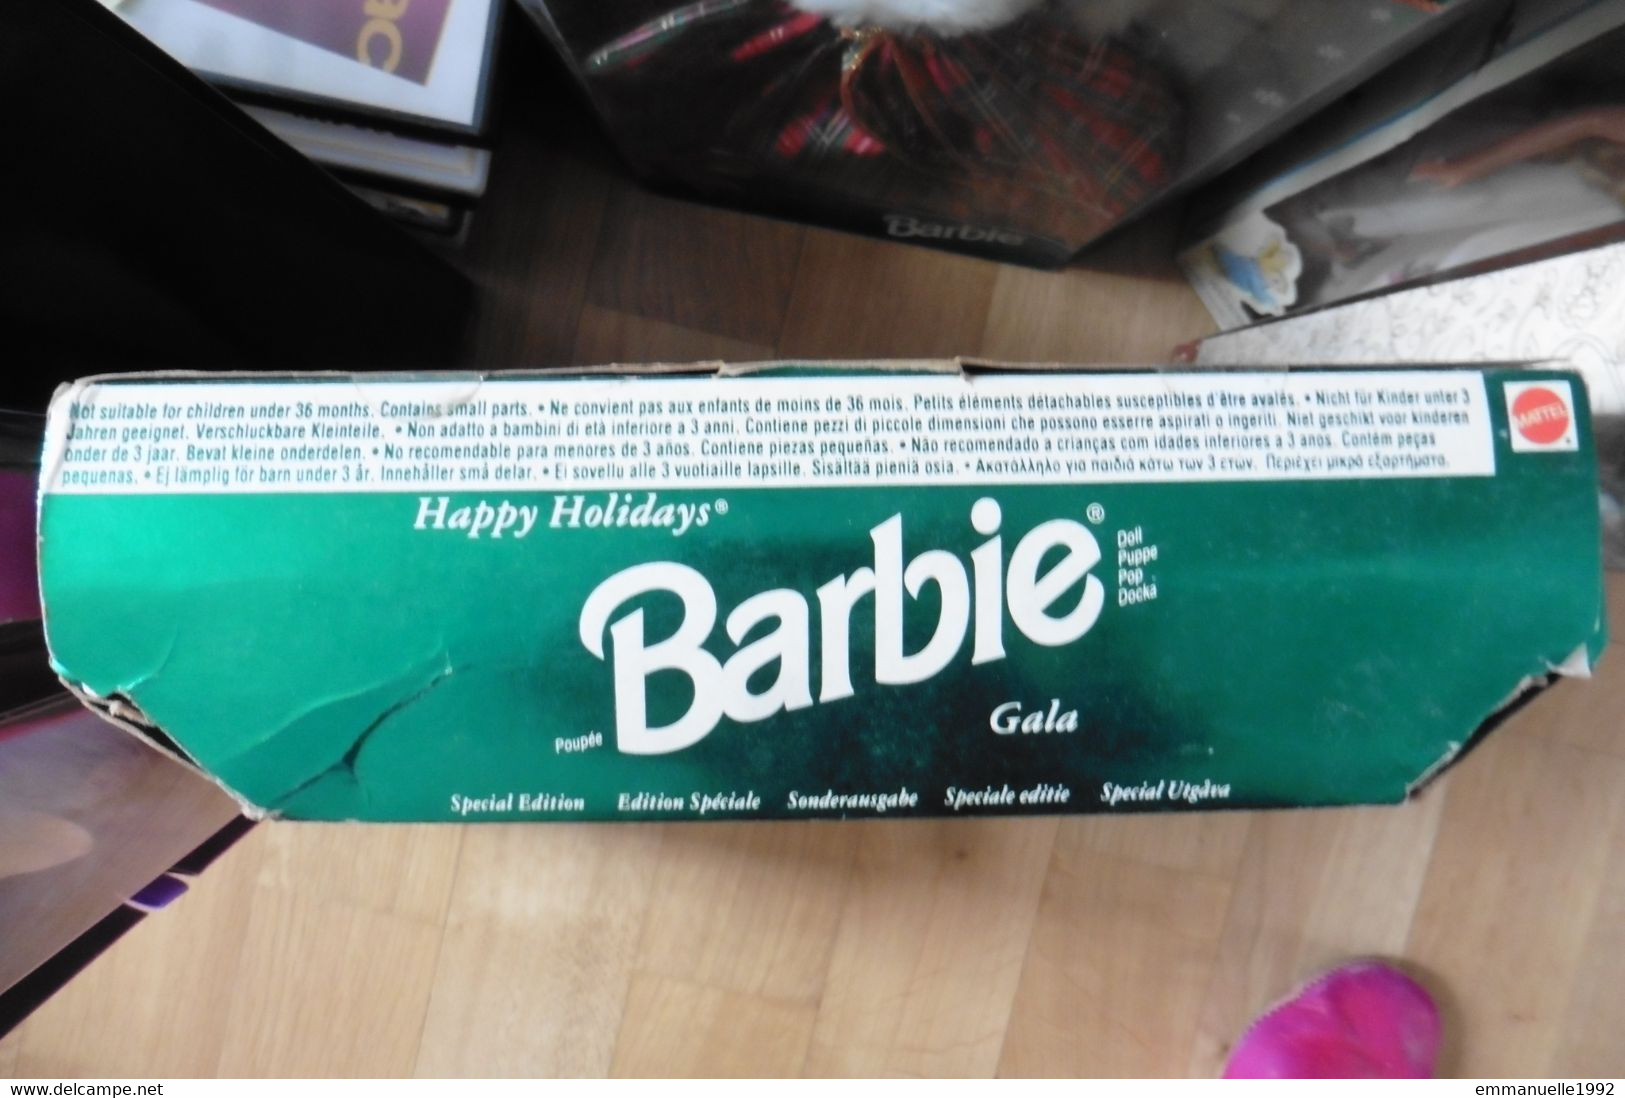 NEUF - Barbie happy Holidays Gala 1994 Special Edition Mattel rayée velours vert Noël - RARE !!!